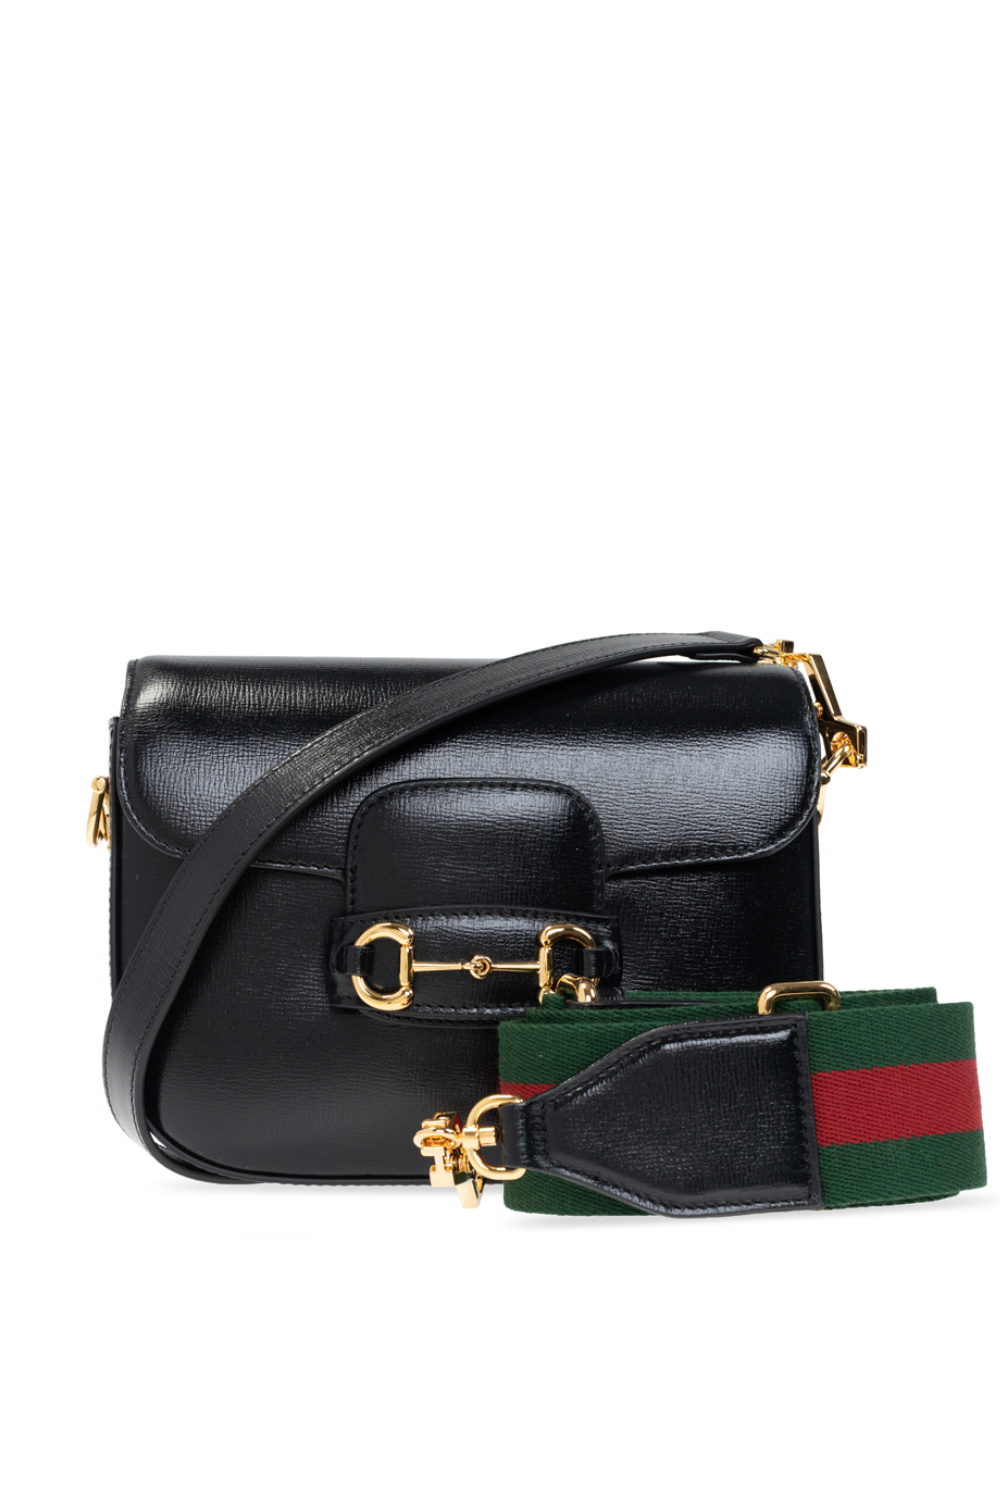 Gucci Horsebit 1955 mini shoulder bag in black leather